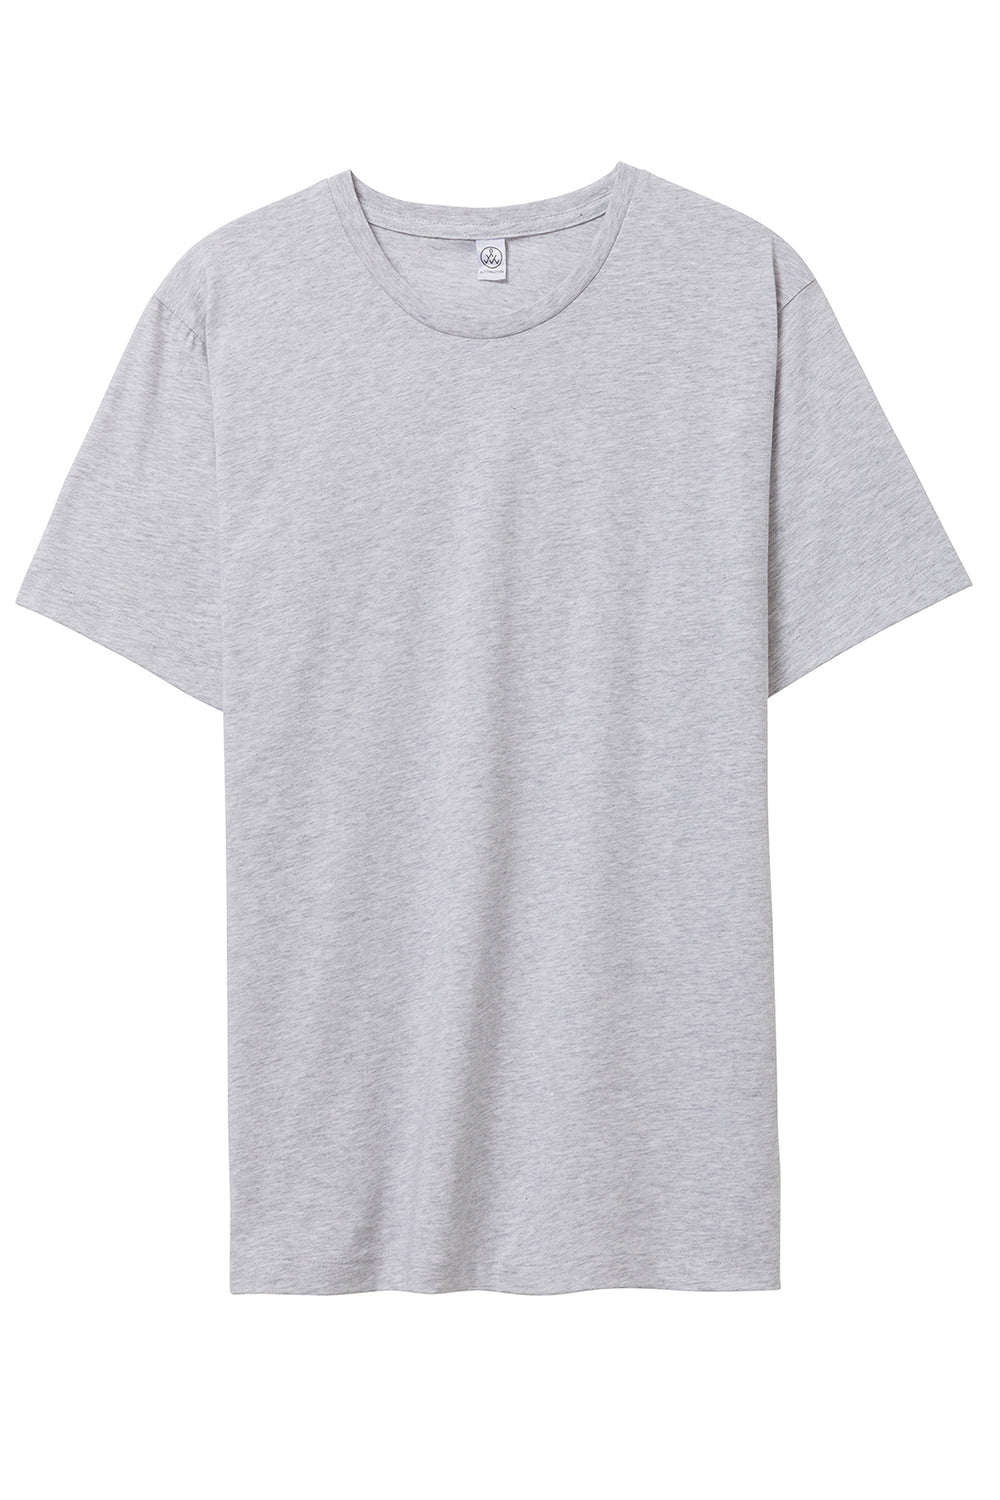 Alternative AA1070/1070 Mens Go To Jersey Short Sleeve Crewneck T-Shirt Heather Light Grey Flat Front